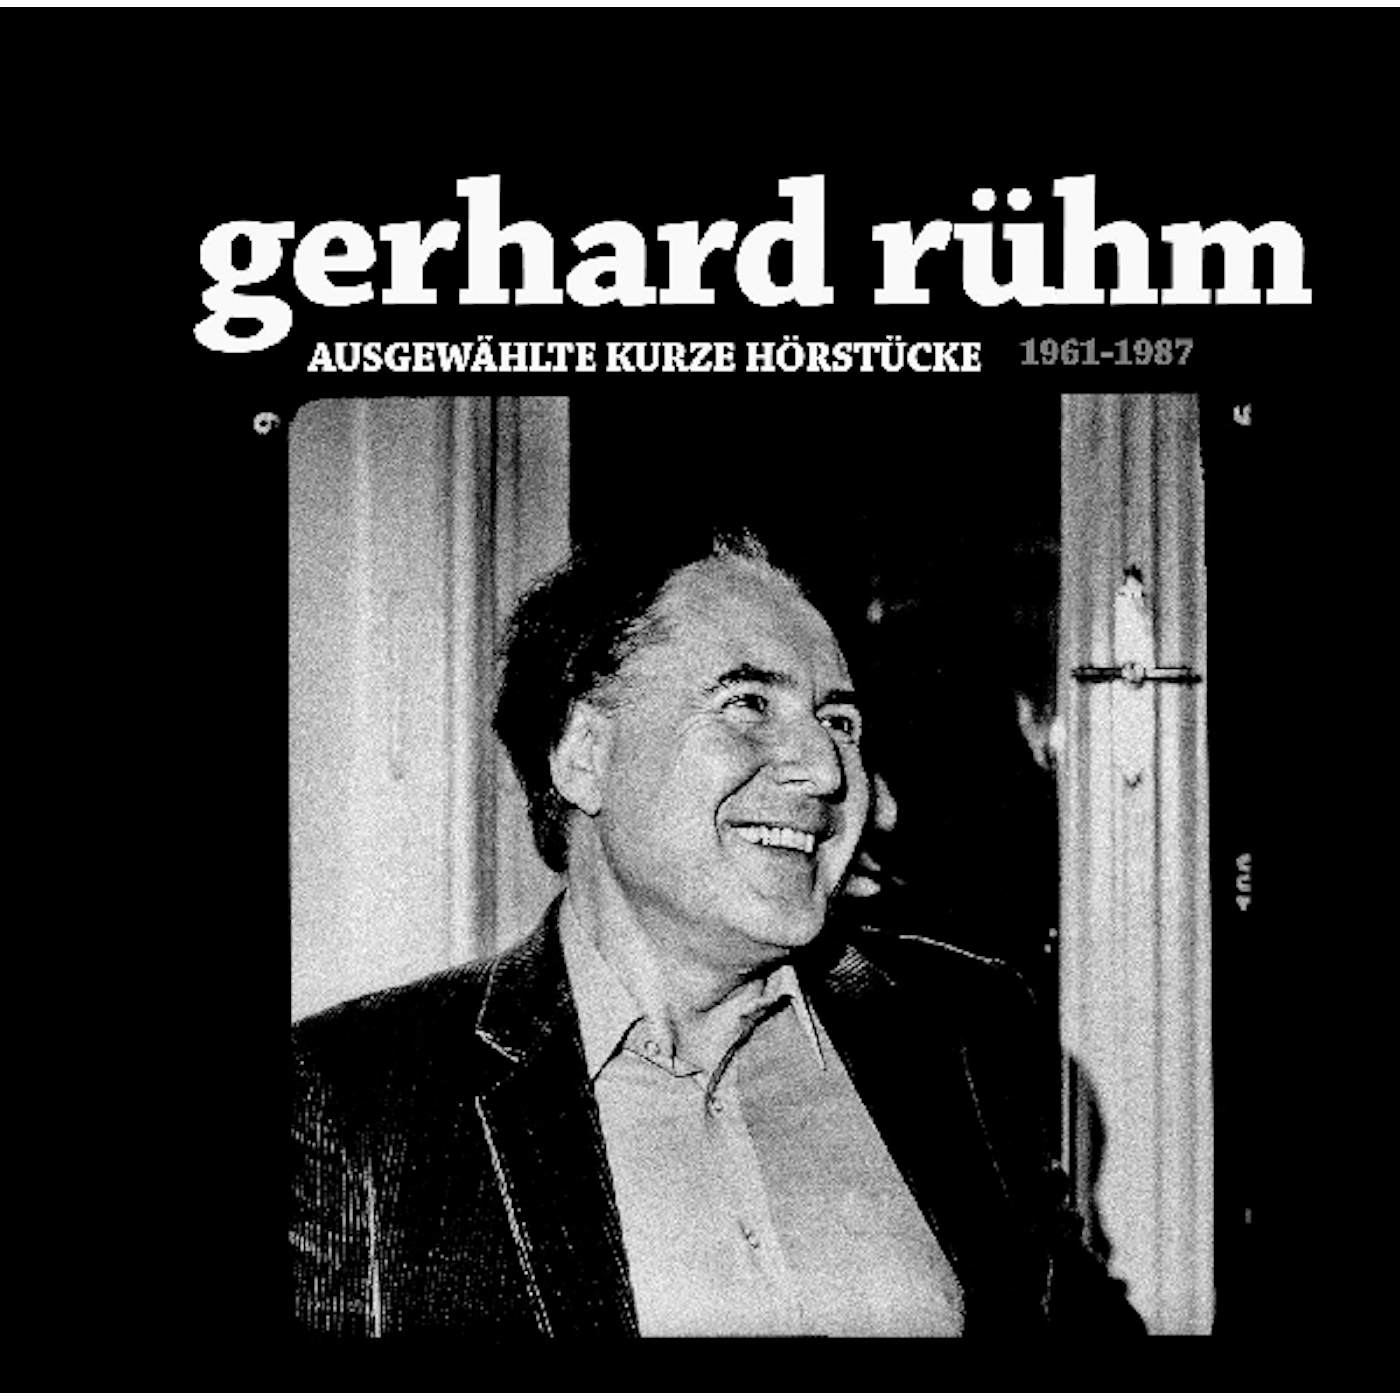 Gerhard Rühm AUSGEWAHLTE KURZE HORSTUCKE Vinyl Record